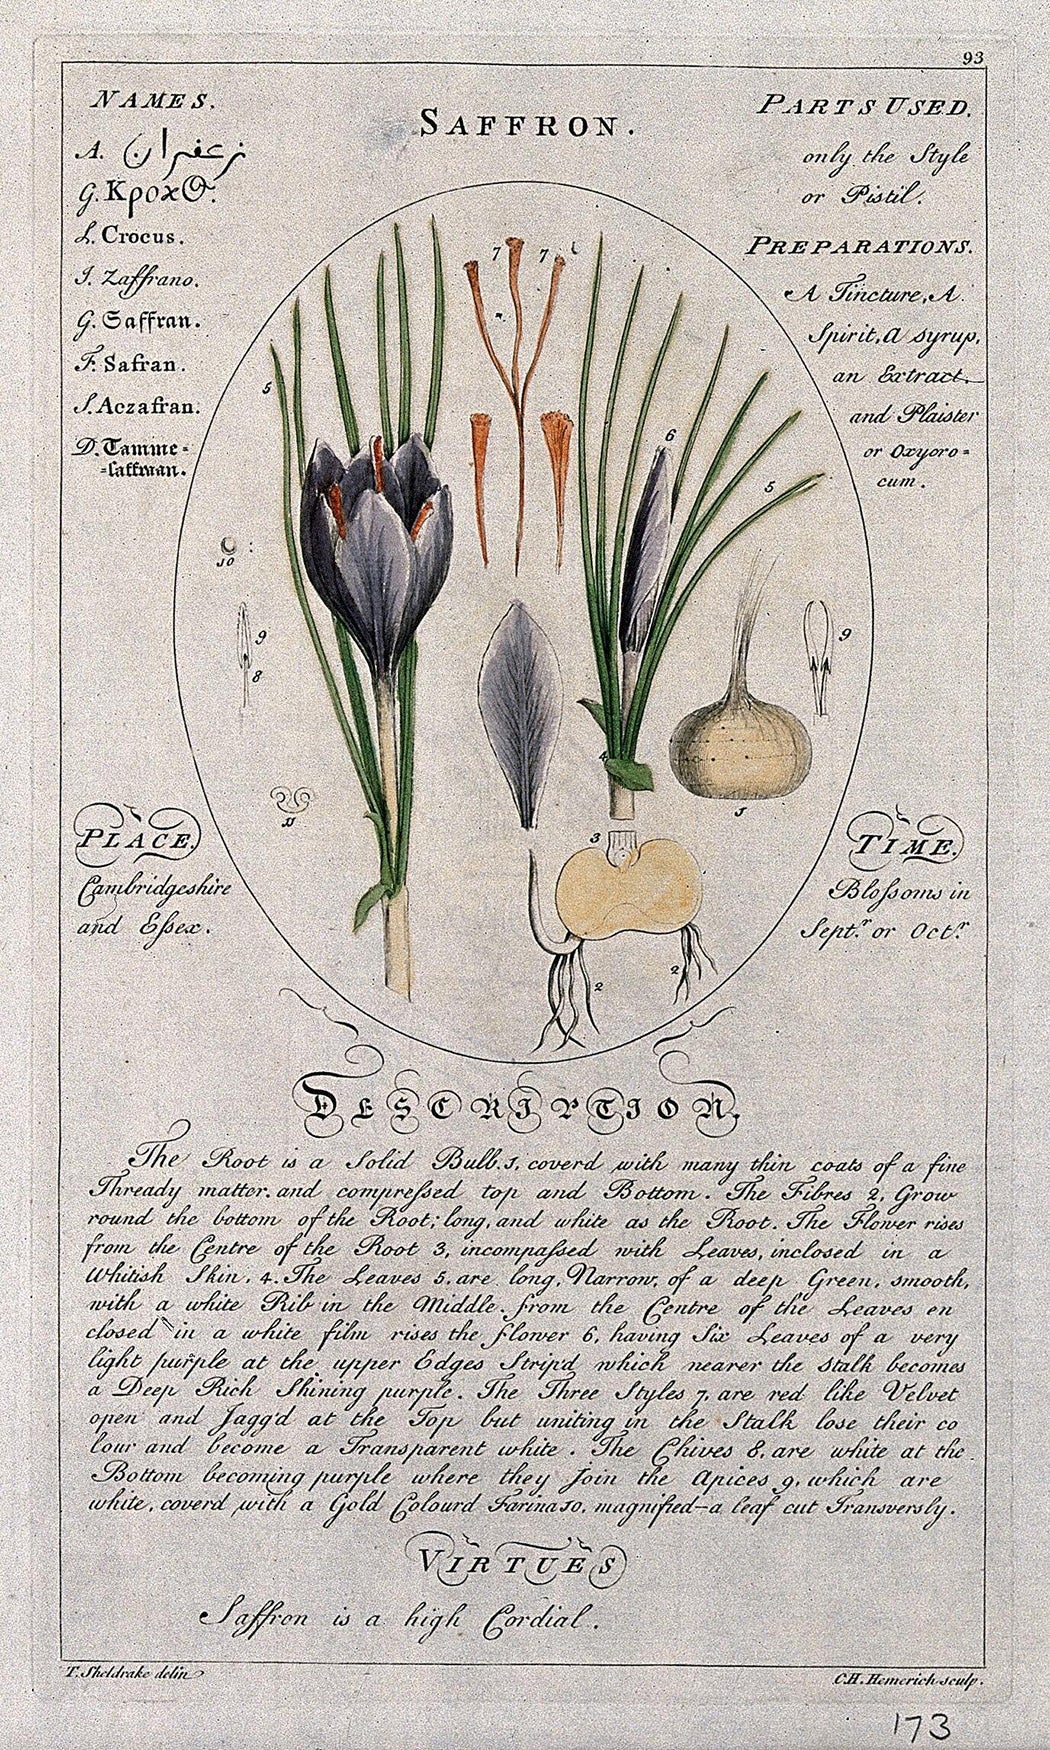 Colored line engraving of saffron by C.H. Hemrich, after T. Sheldrake